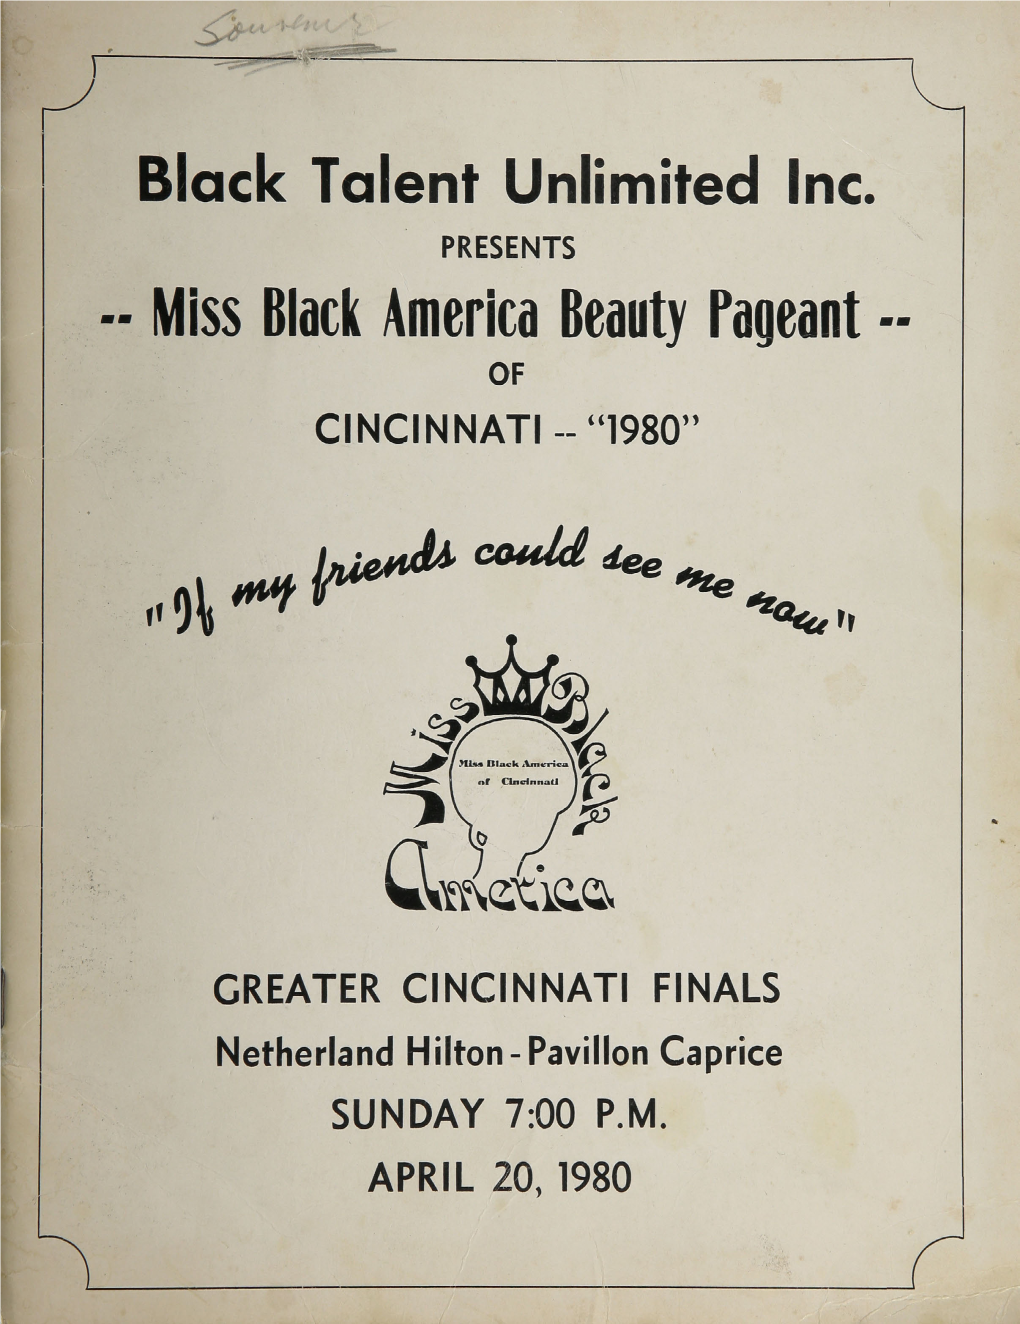 Miss Black America Beauty Pageant of CINCINNATI -“1980”